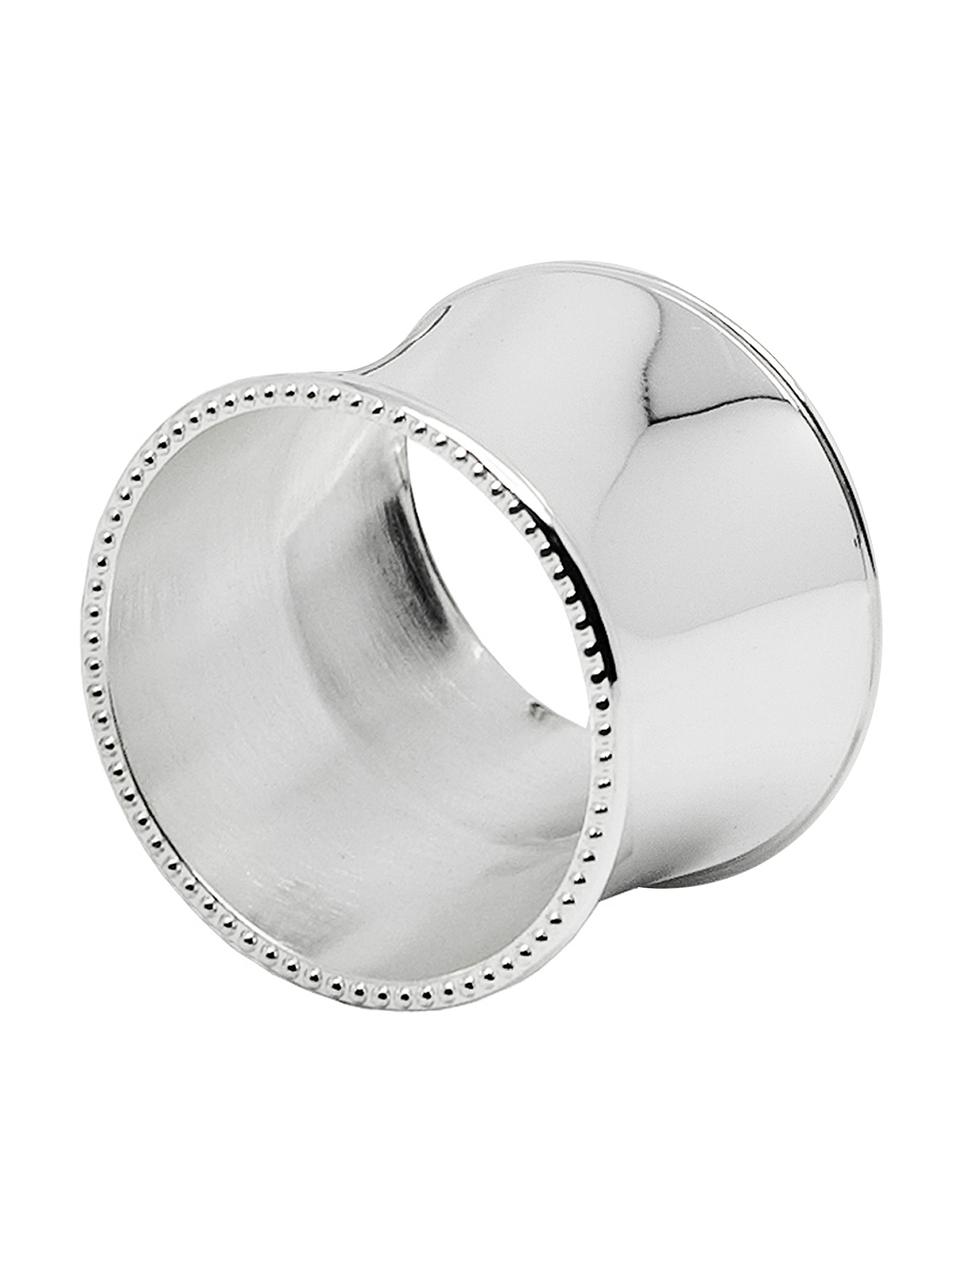 Serviettenringe Perla, 4 Stück, Stahl, versilbert und anlaufgeschützt, Silber, Ø 5 x H 4 cm